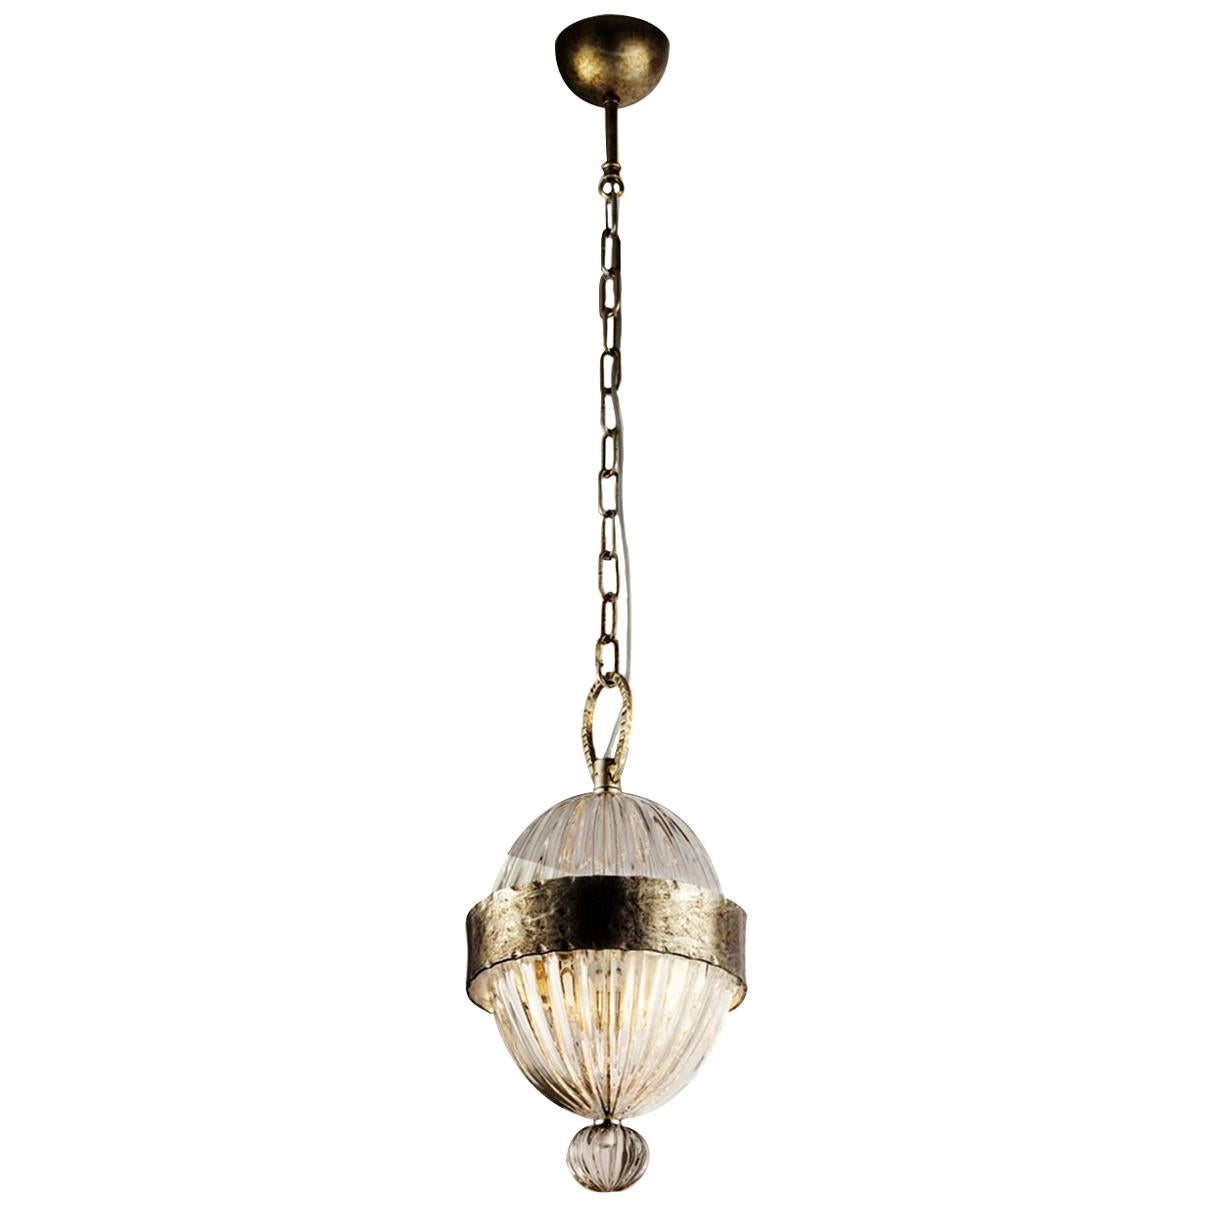 Decorative Silver Pendant Lamp